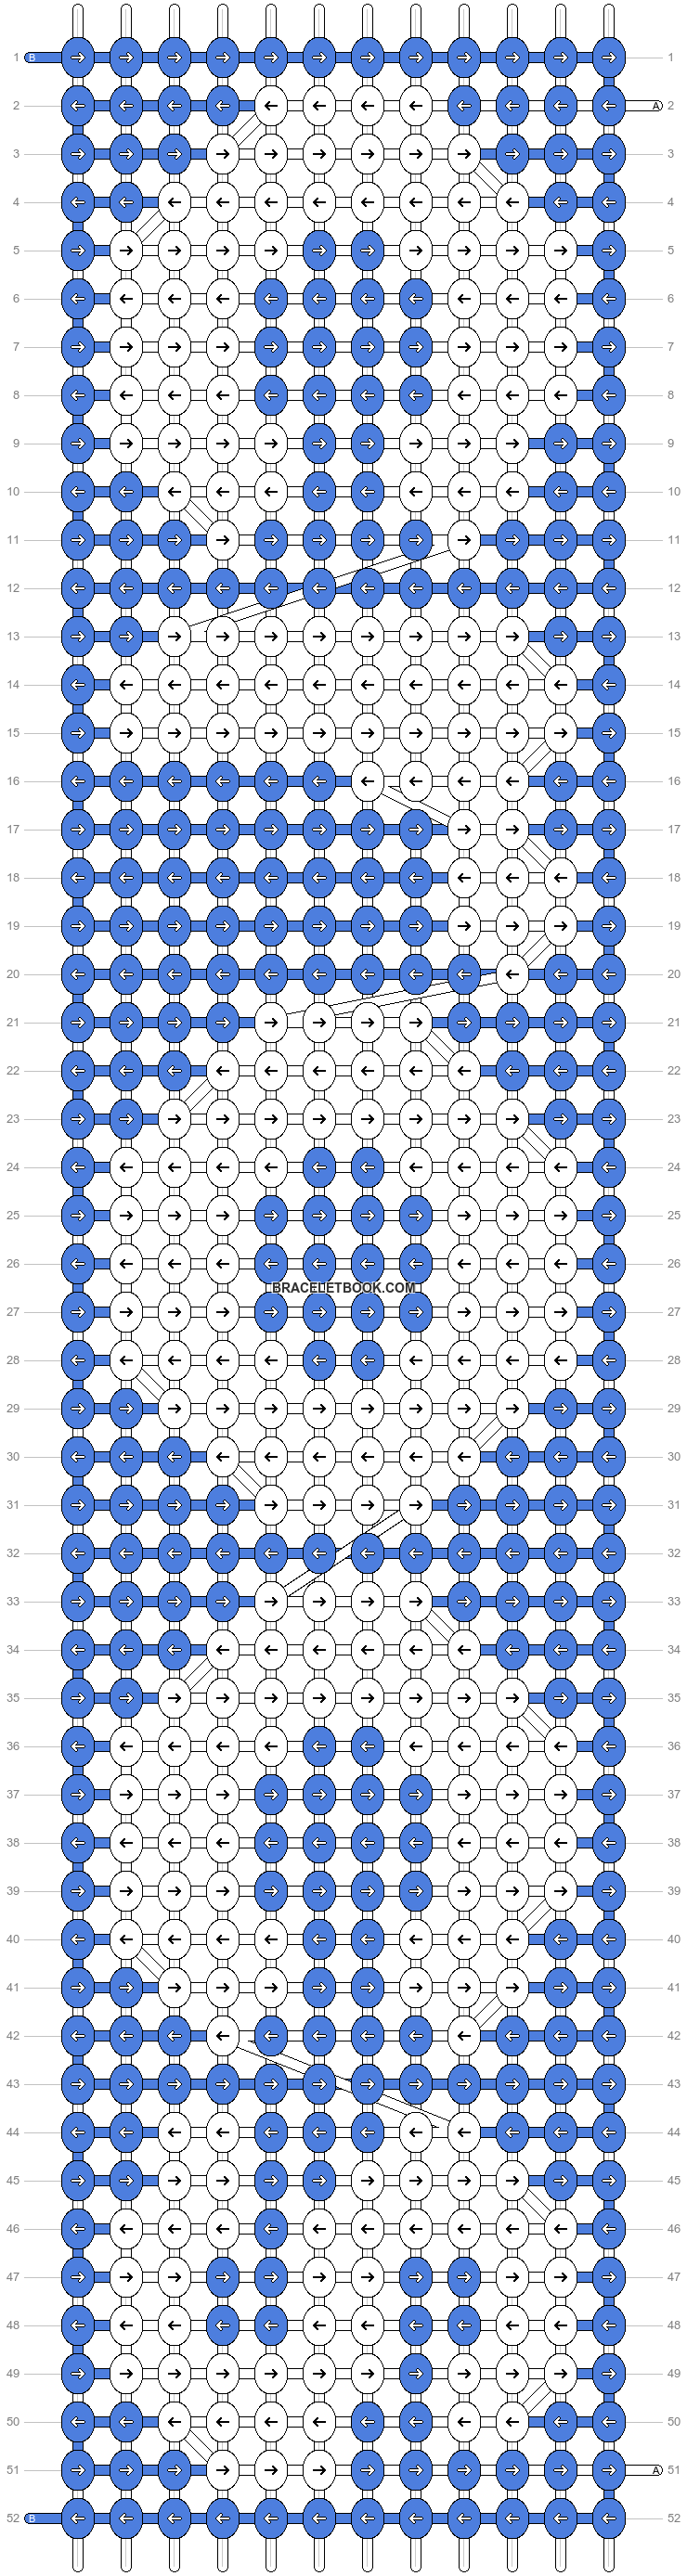 Alpha pattern #64184 variation #118504 pattern